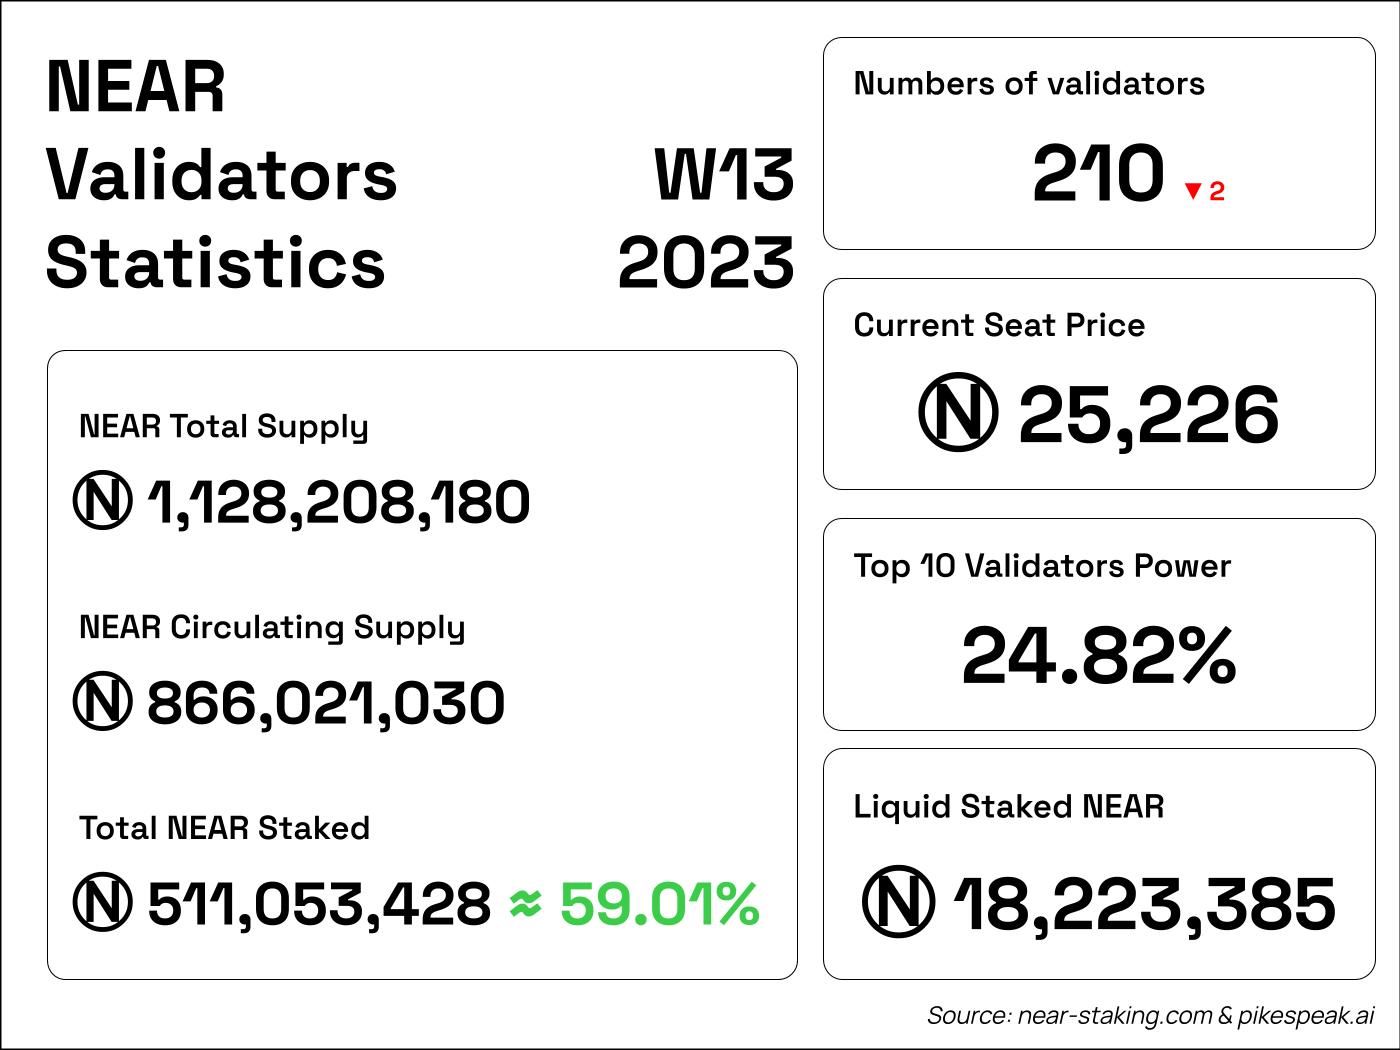 NEAR validators statistics week 13